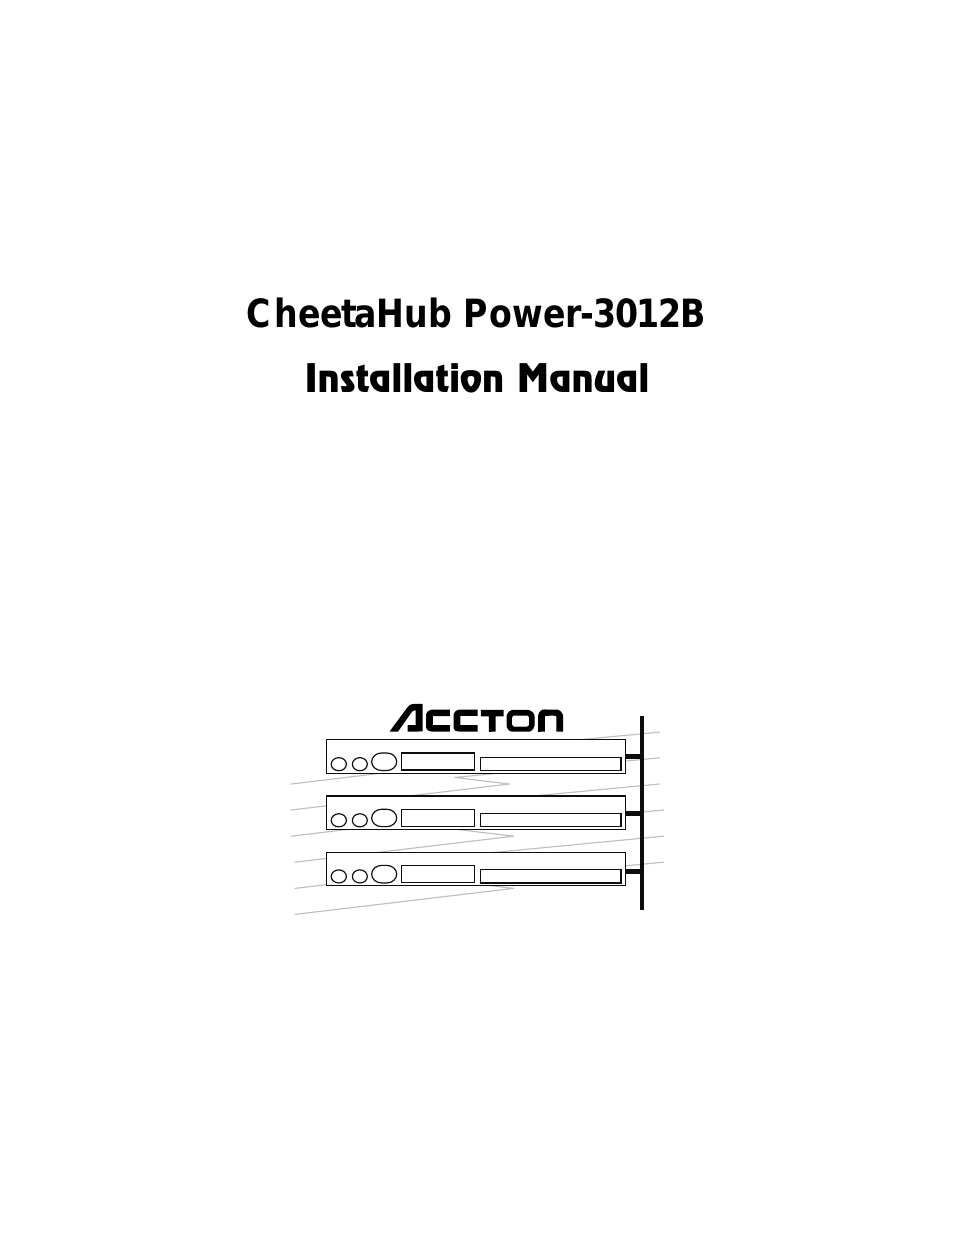 CHEETAHUB POWER 3012B